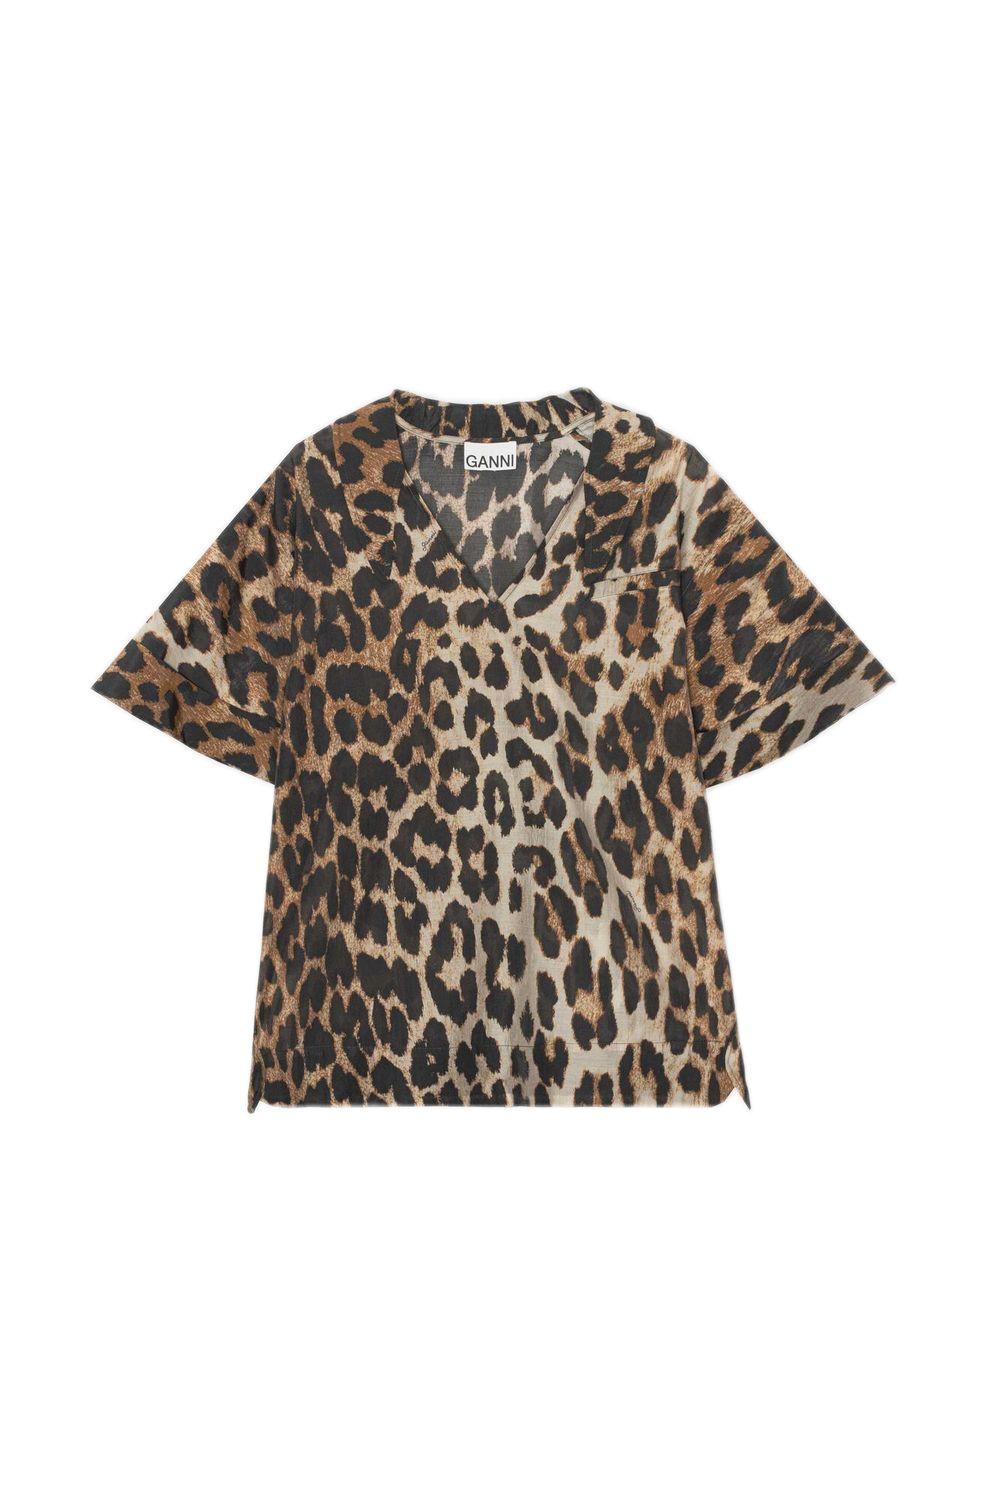 Ganni Leopard Print Shirt | Lyst